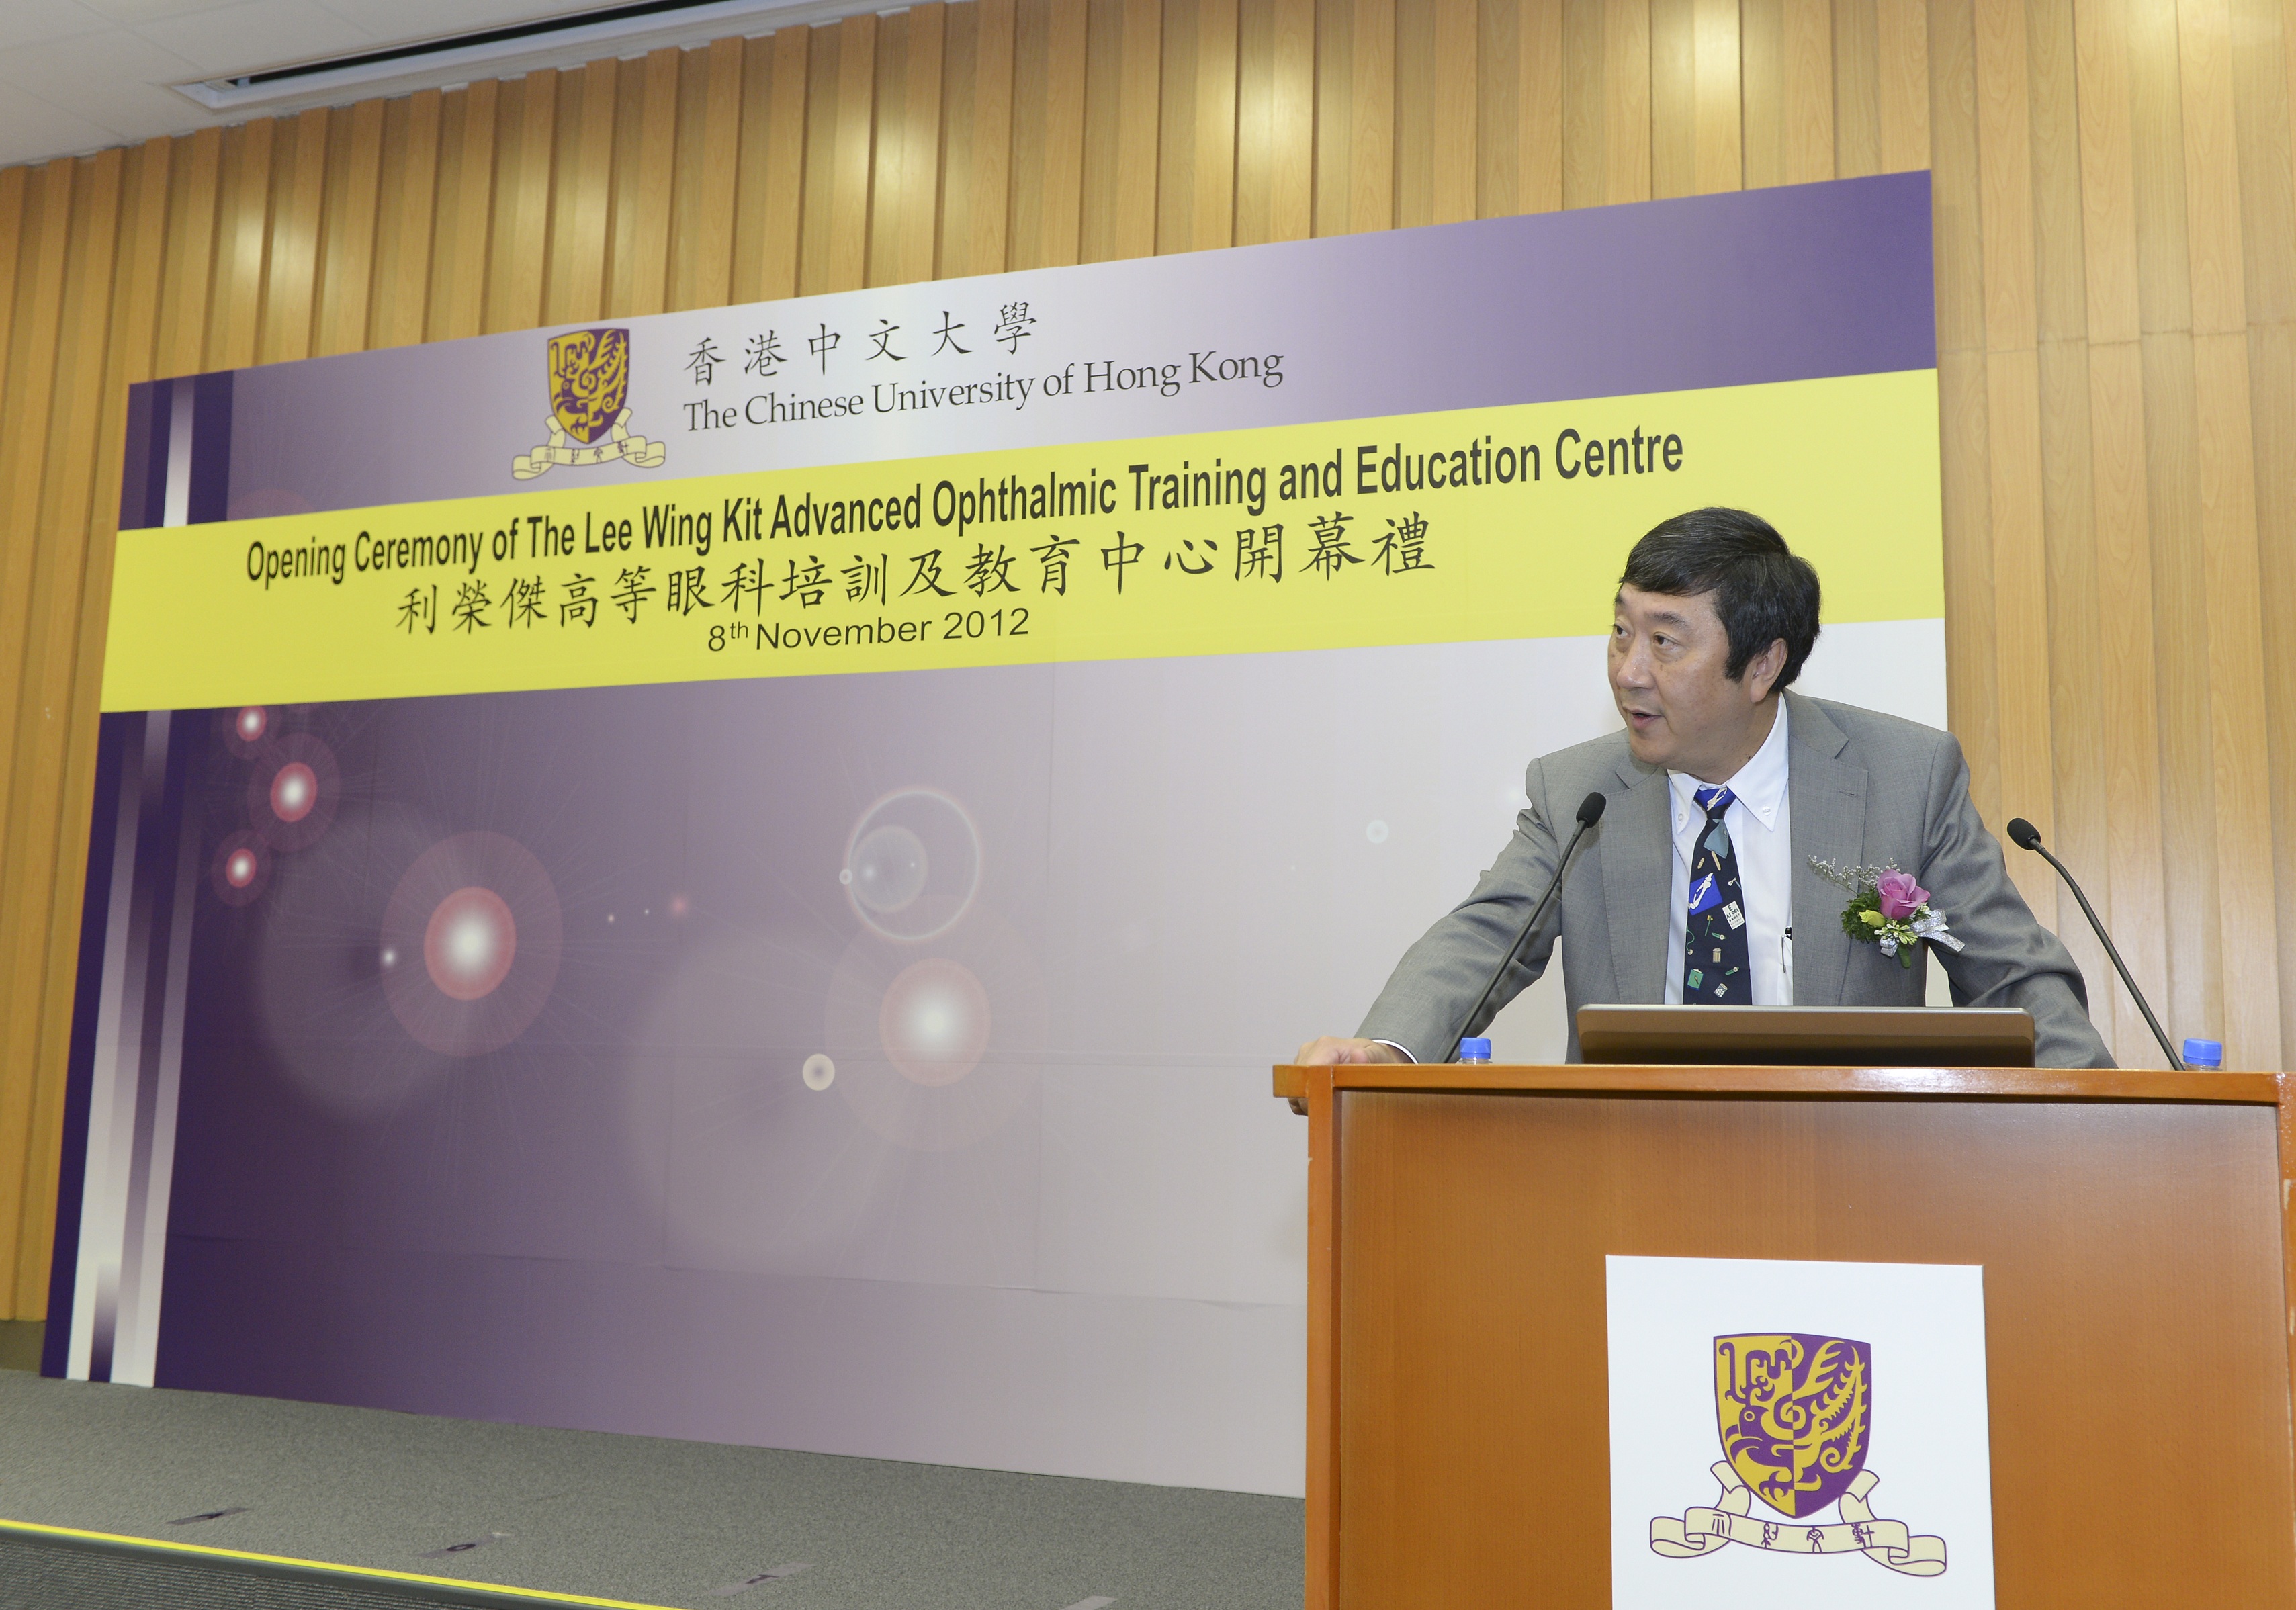 Speech by Professor Joseph J Y Sung, Vice-Chancellor and President, CUHK